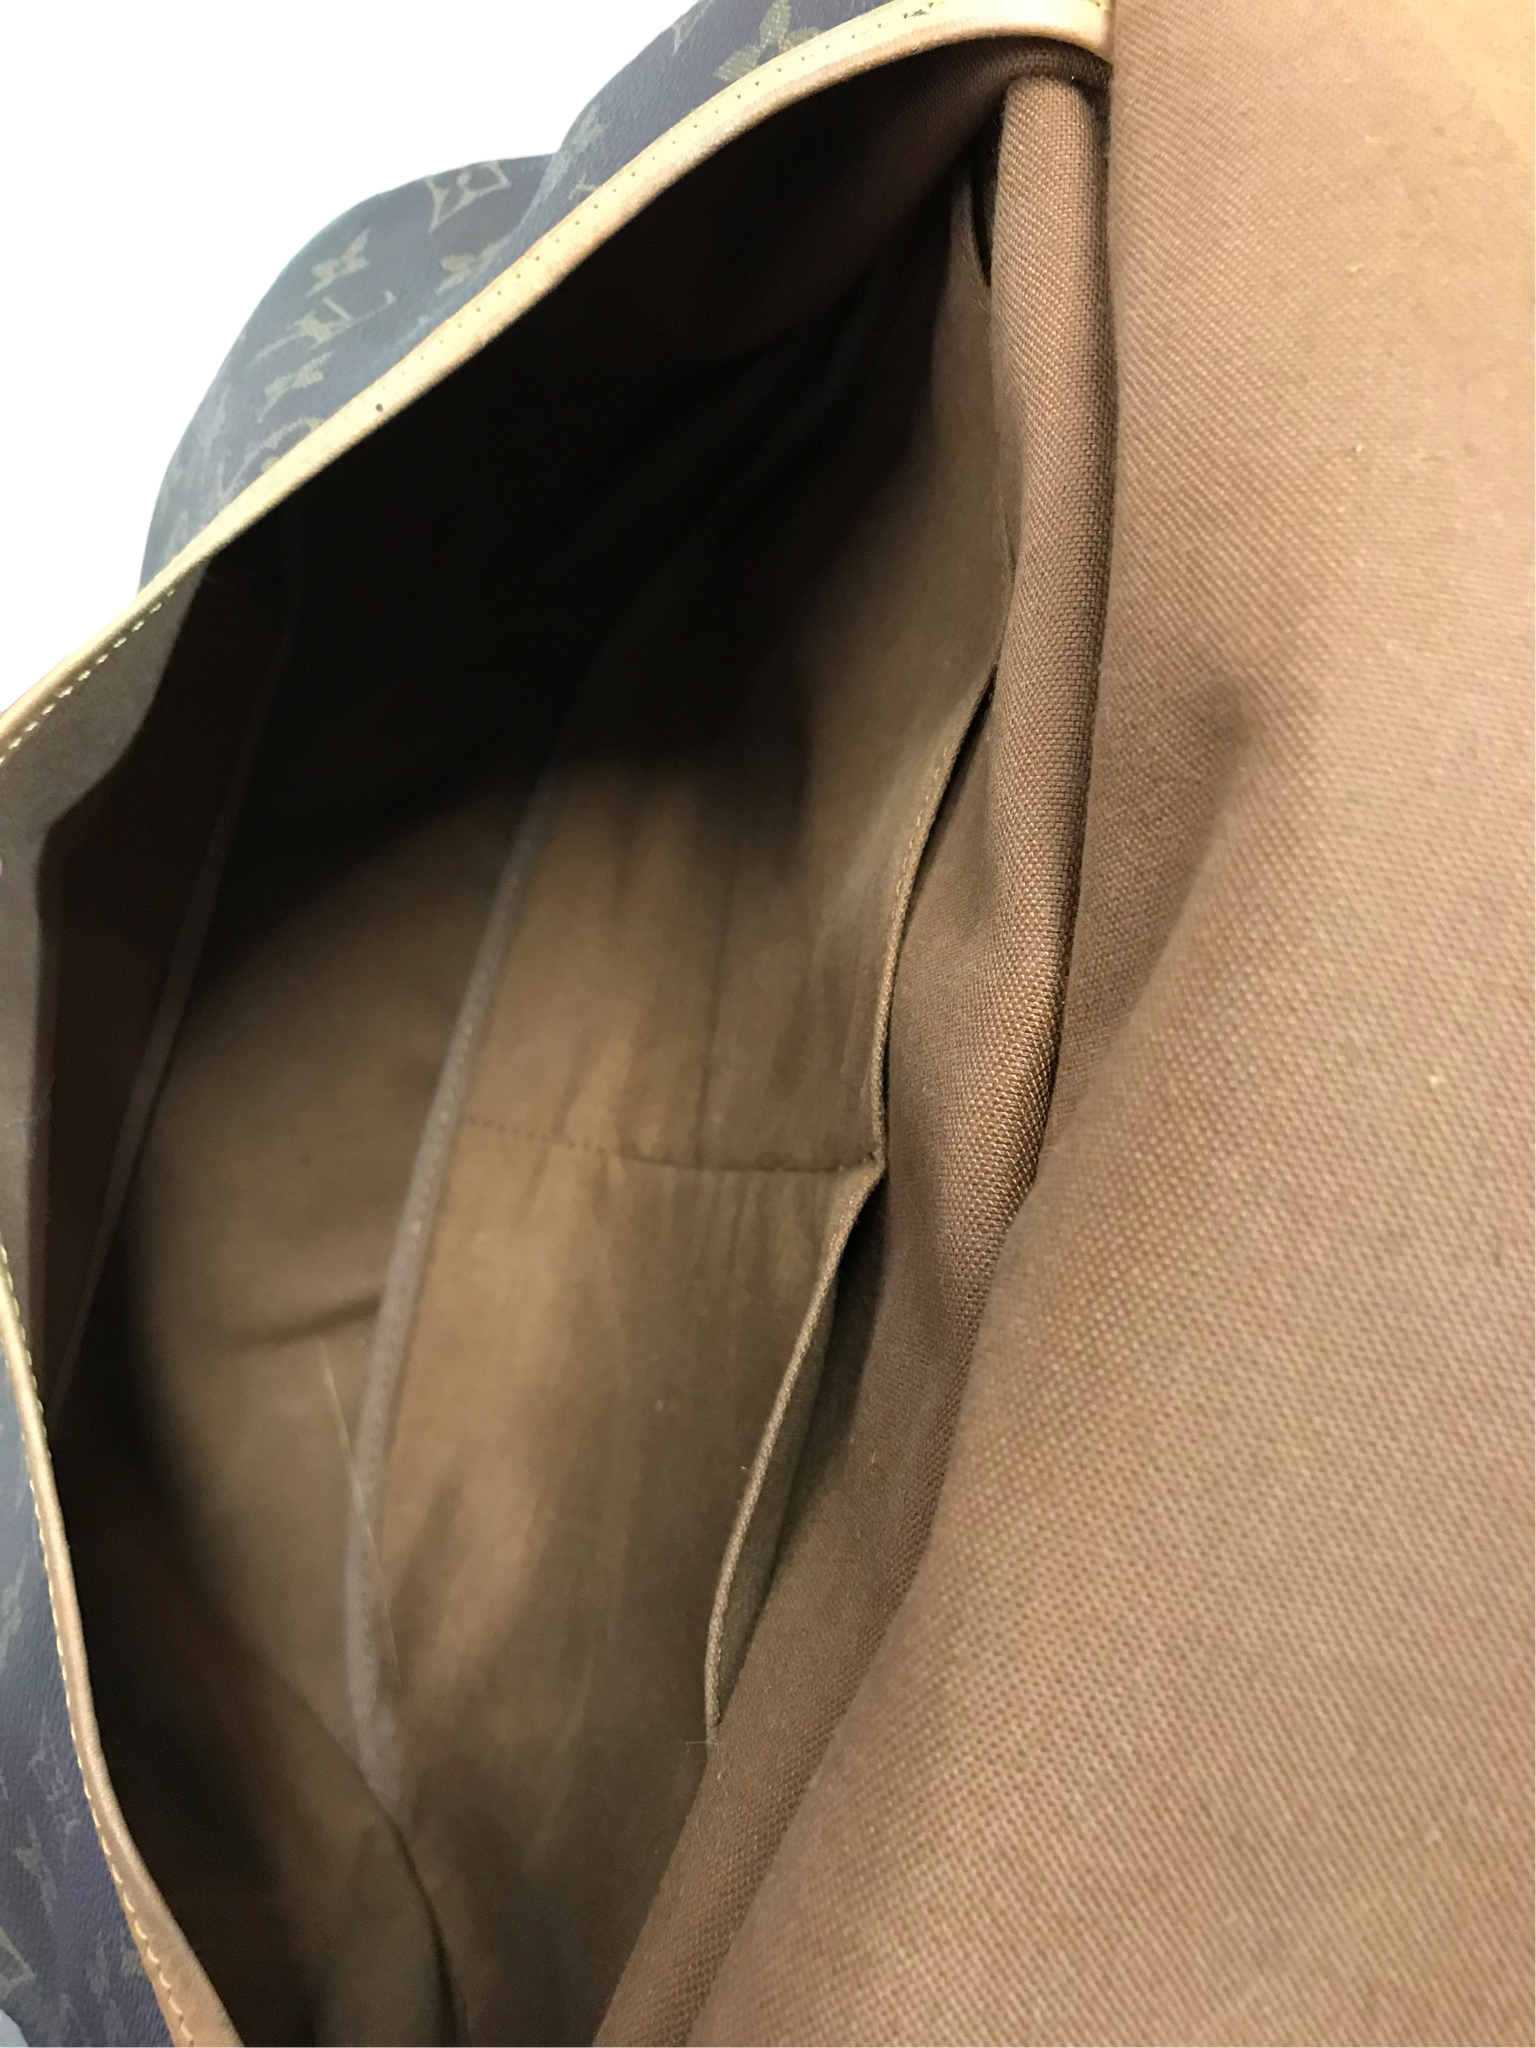 NTWRK - Preloved Louis Vuitton Monogram Saumur 35 Crossbody Bag